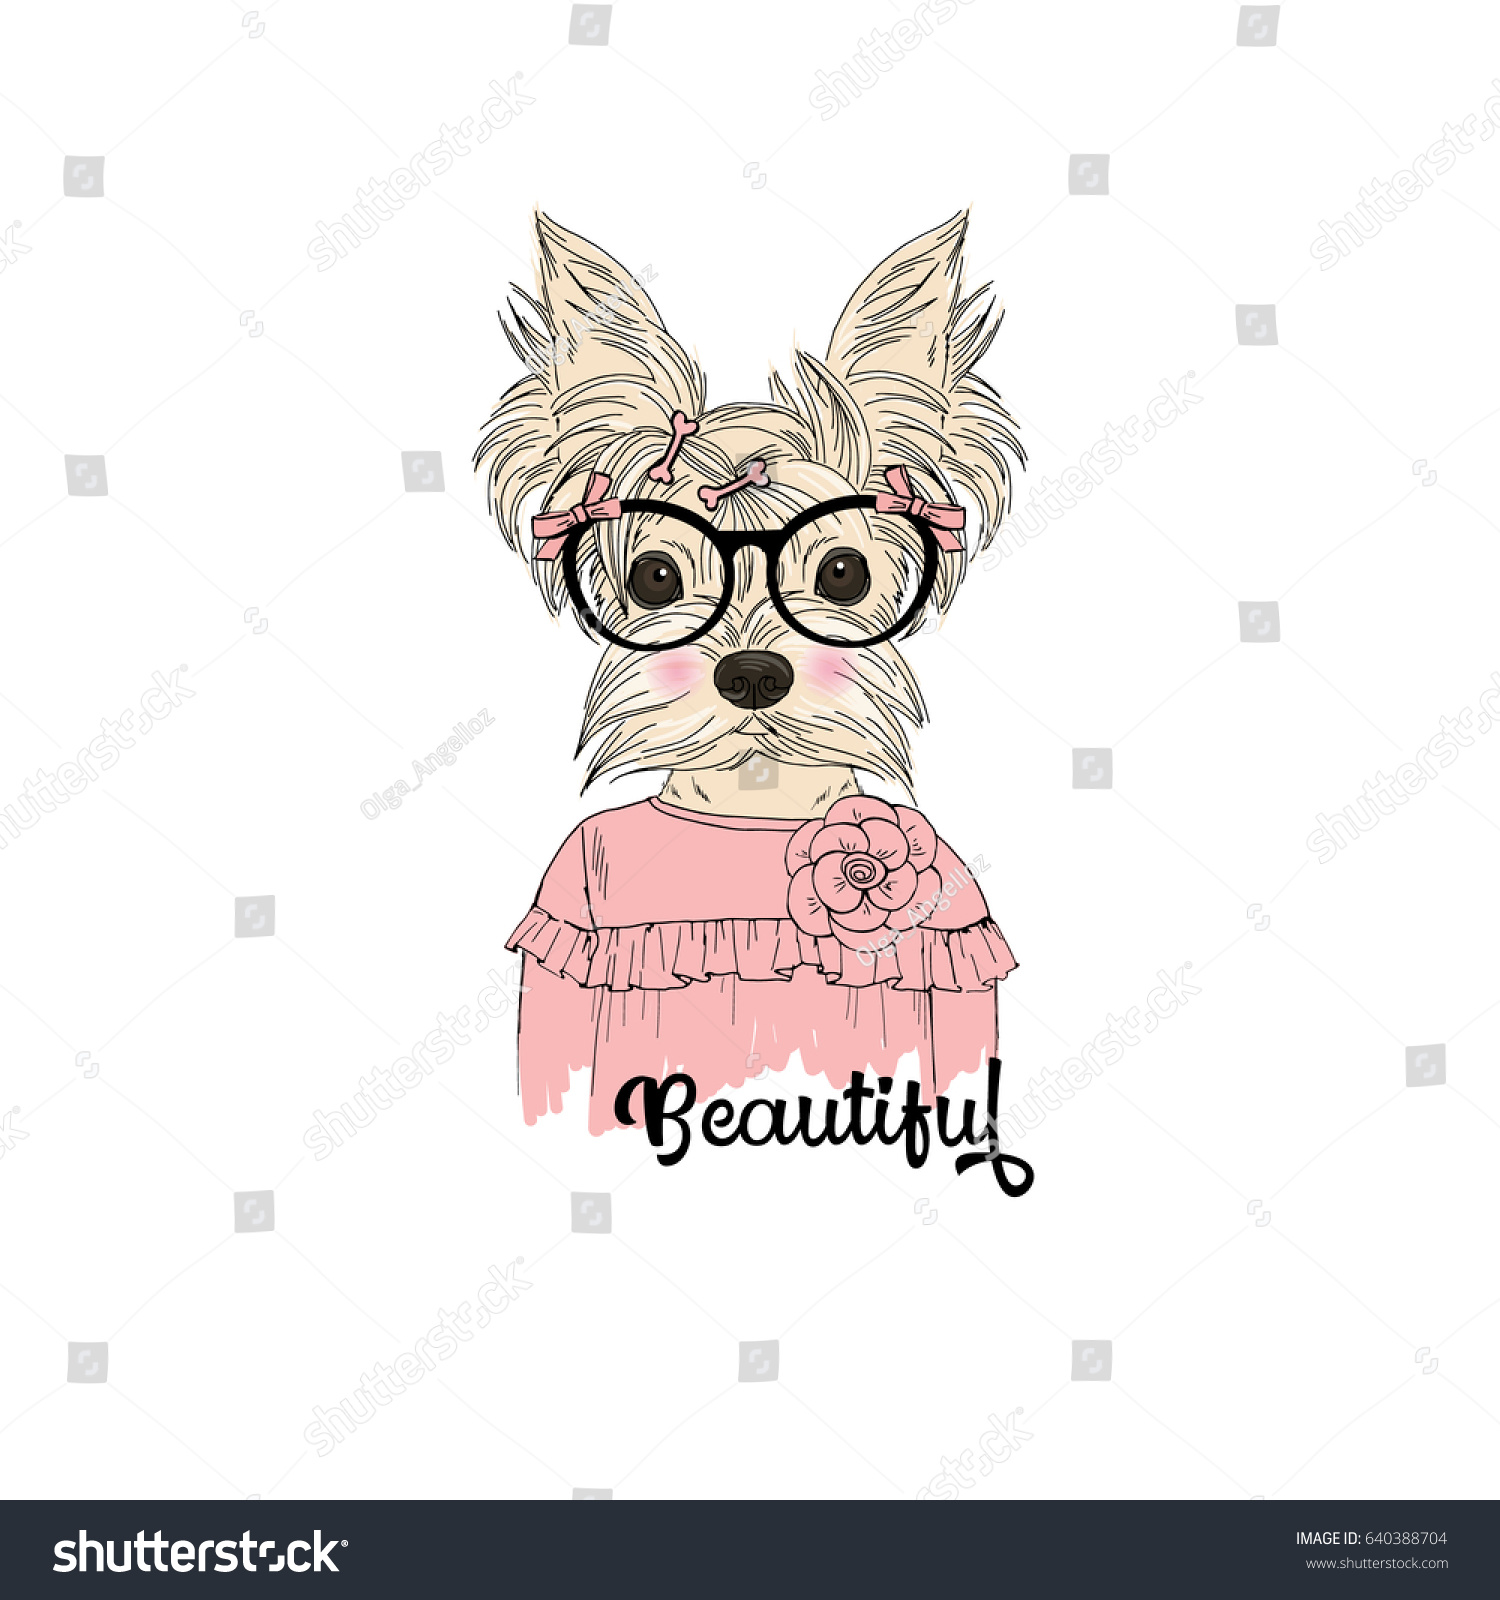 Stock Vector Cute Portrait Of Yorkshire Terrier Hand Drawn Animal Illustration 640388704 